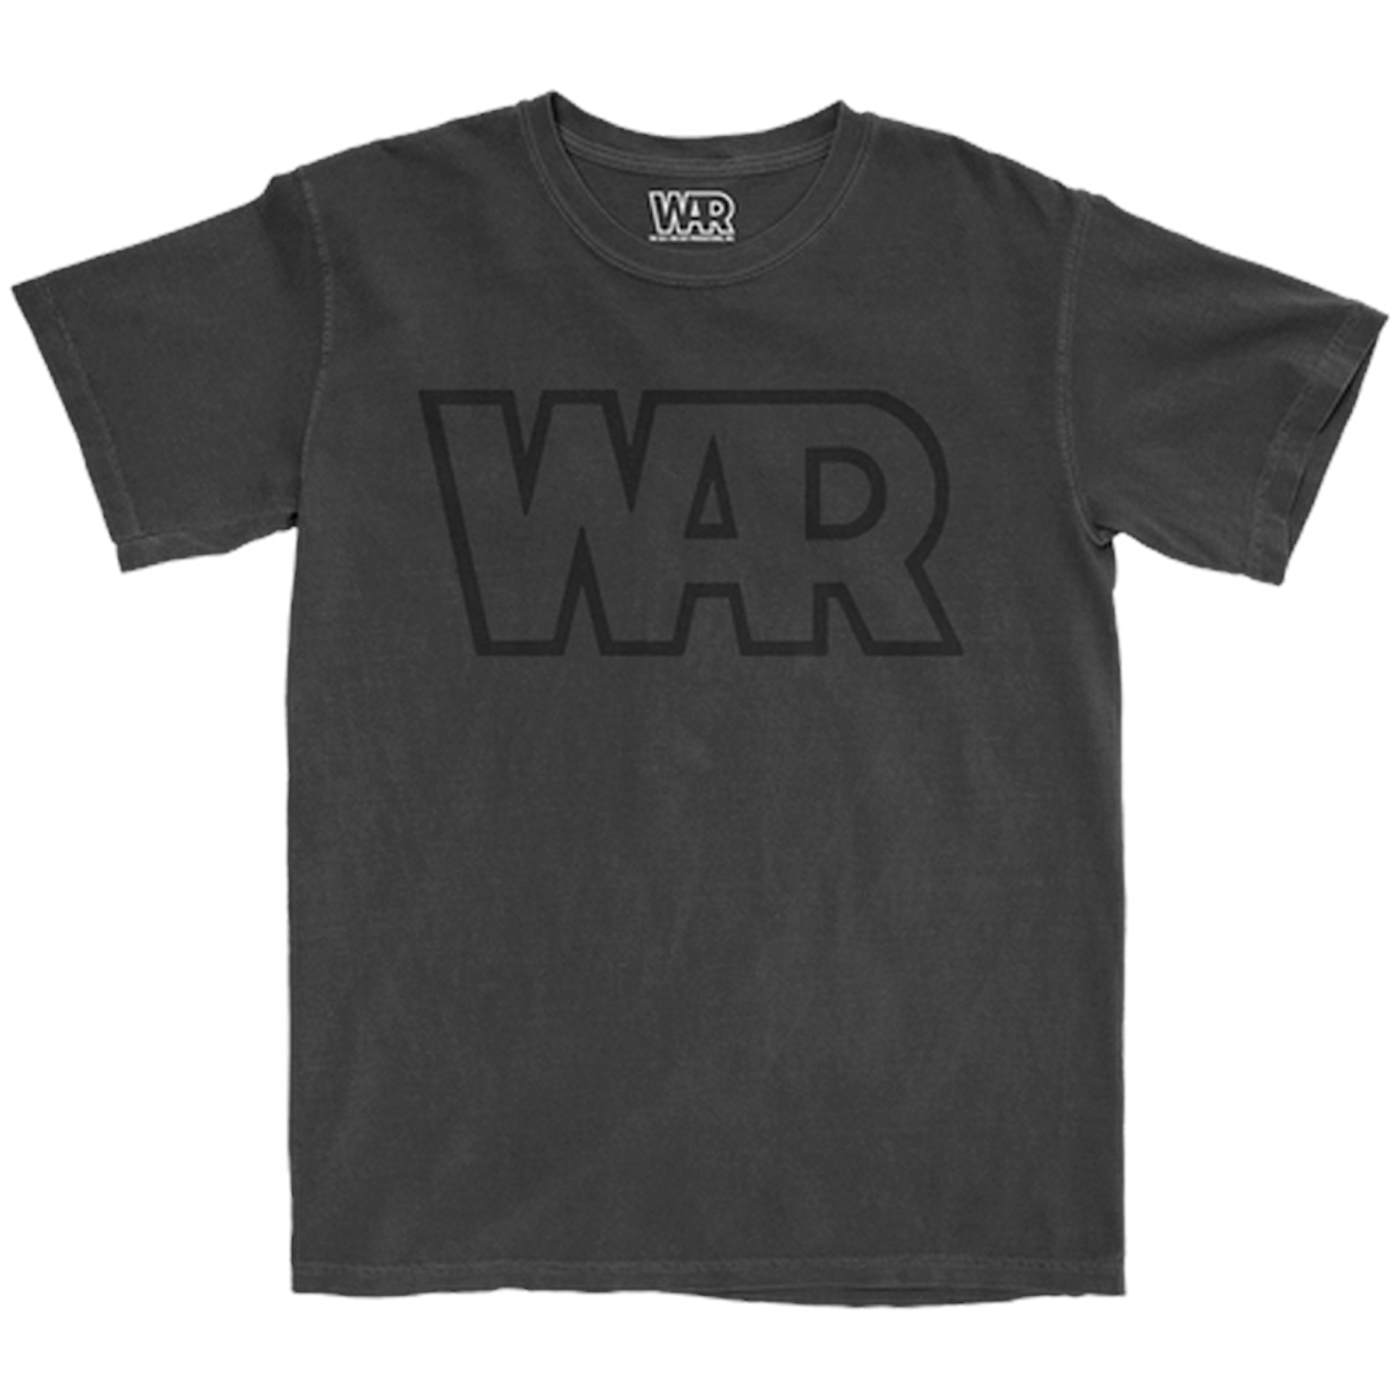 War Black on Black T-Shirt